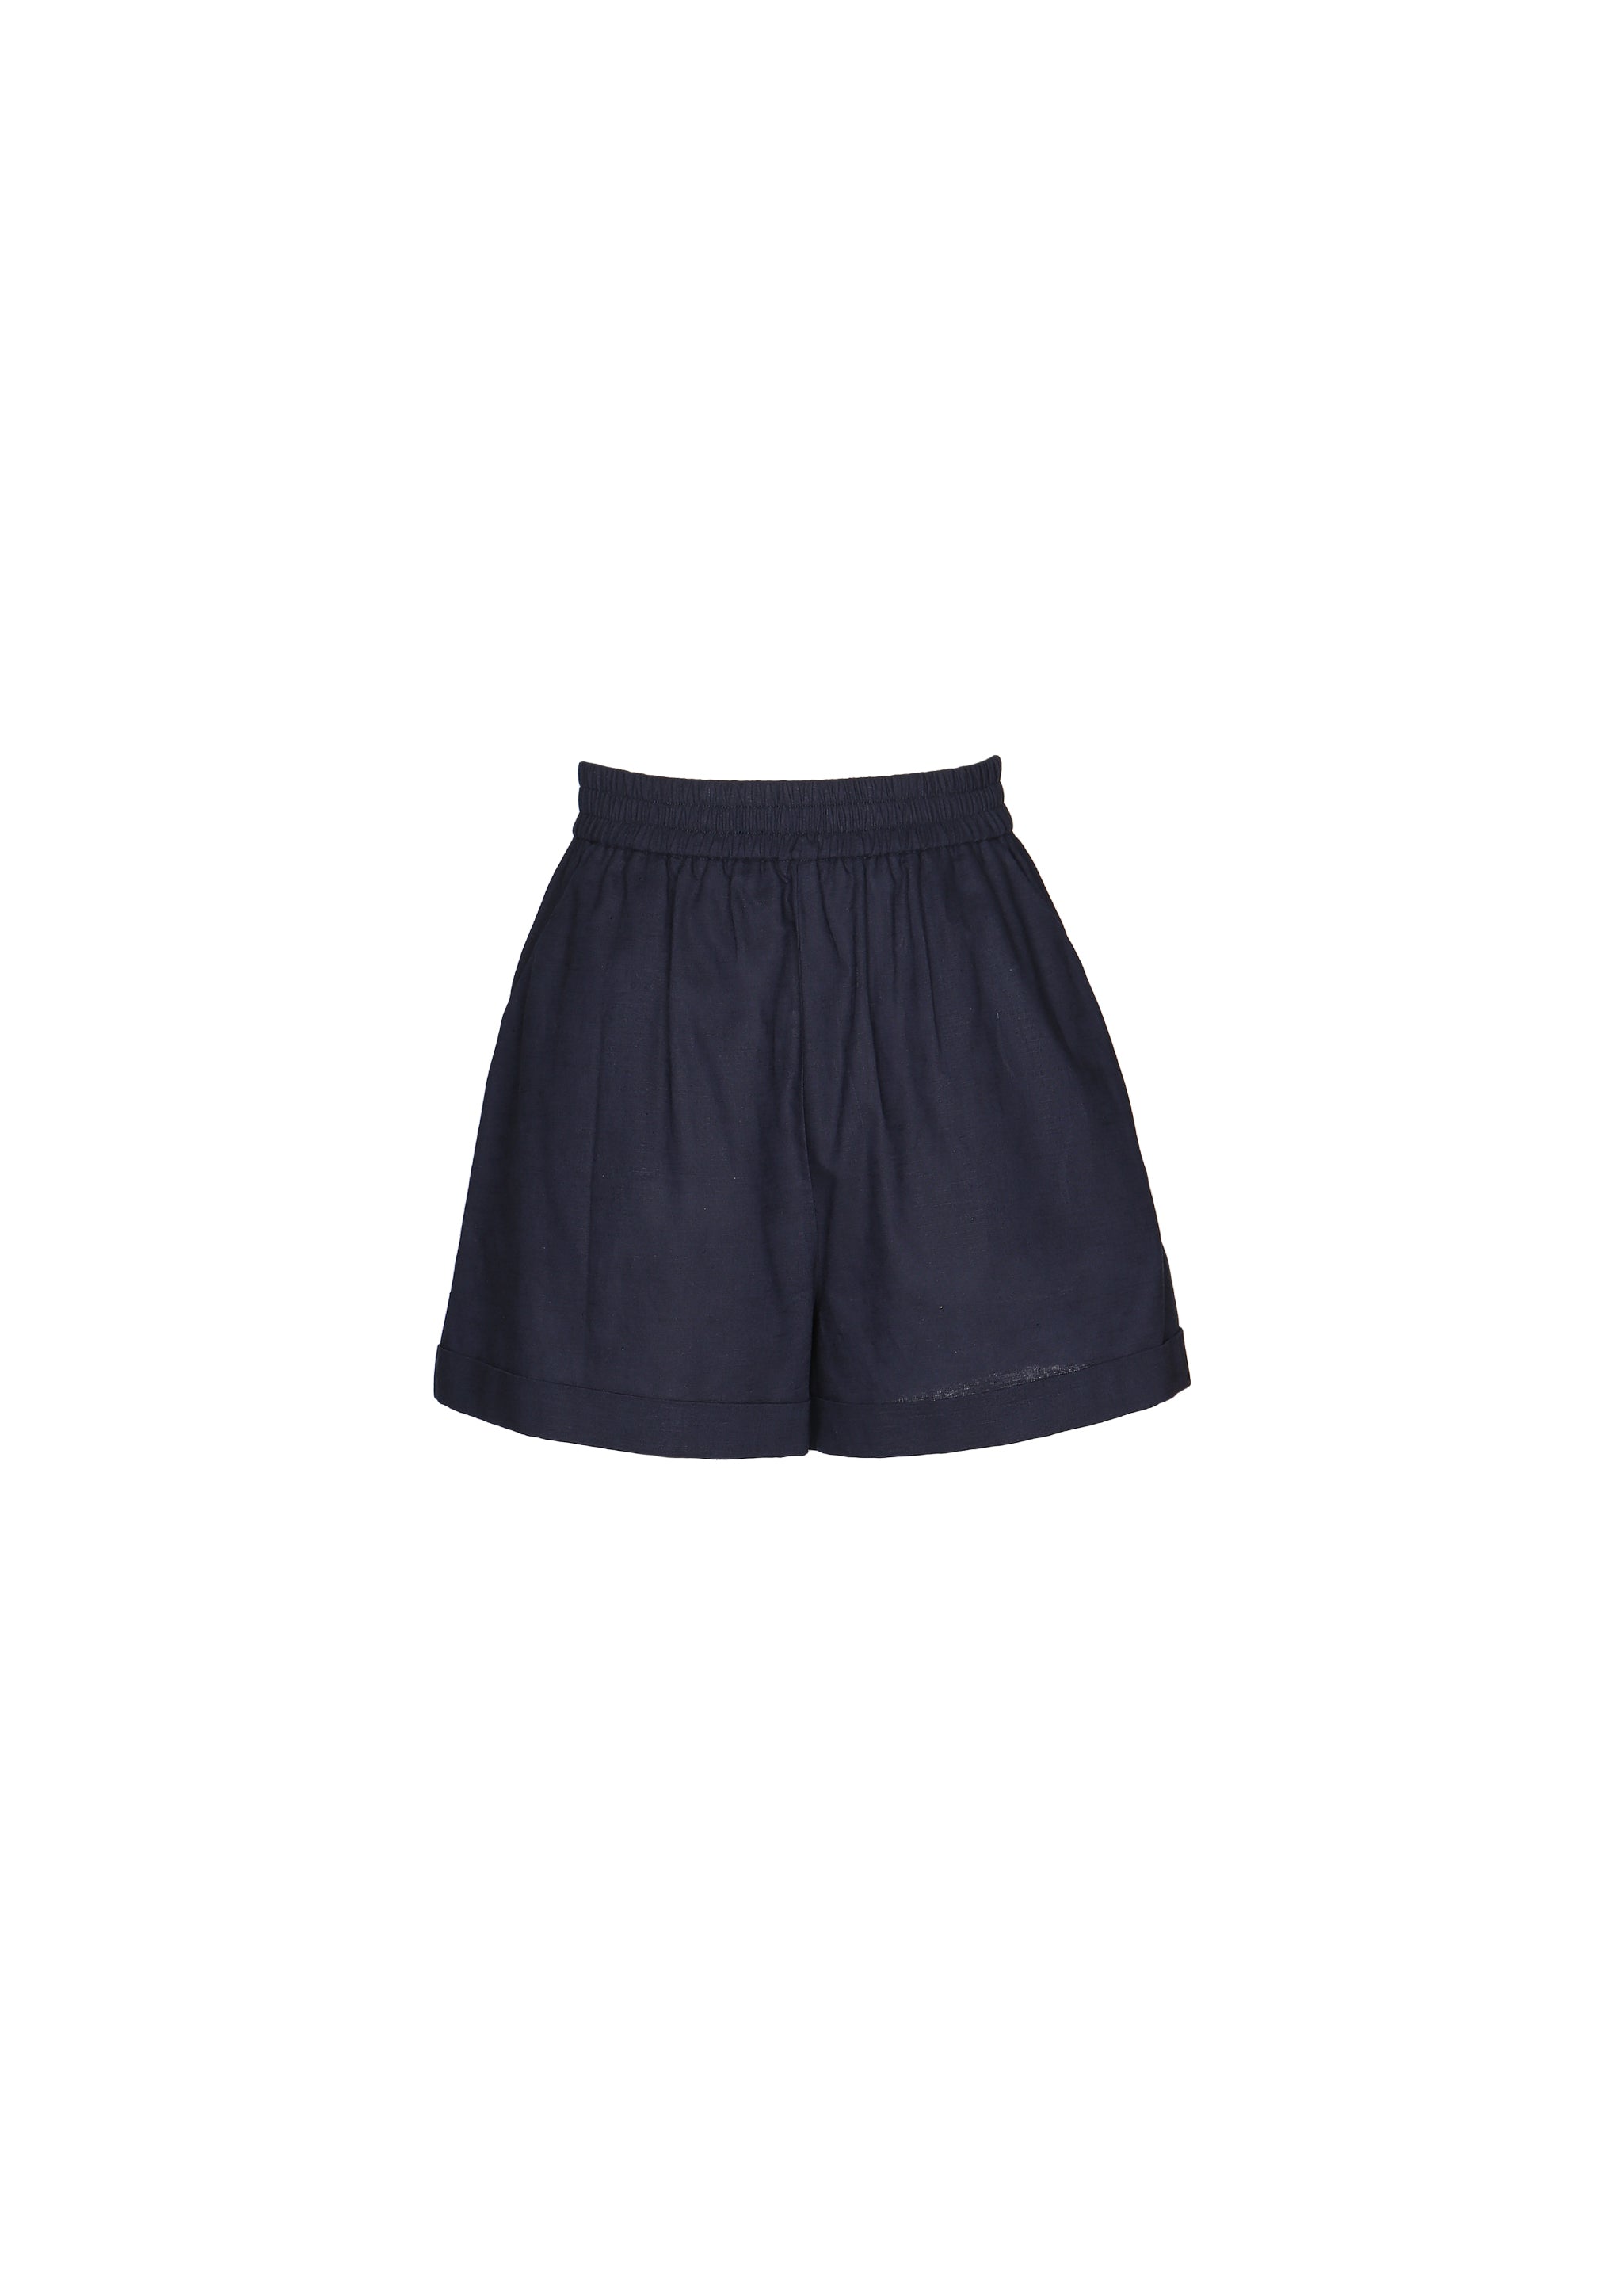 DORIS navy shorts